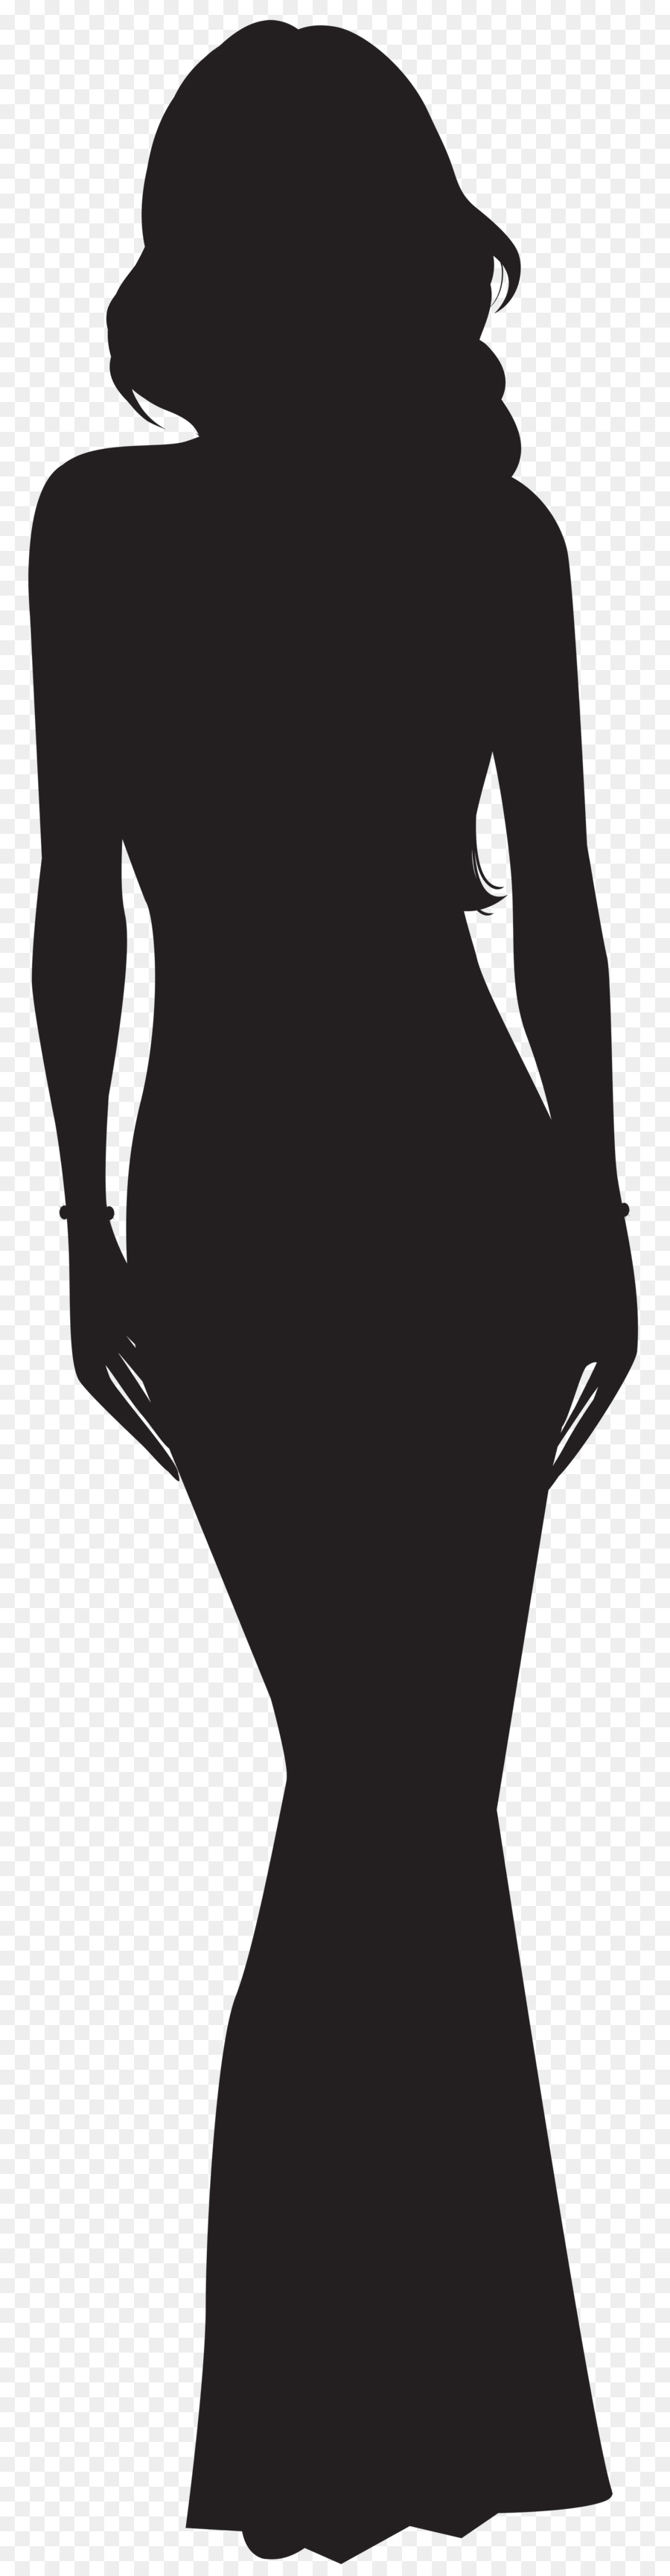 Woman Silhouette Clip art - black woman png download - 2065*8000 - Free Transparent Woman png Download.